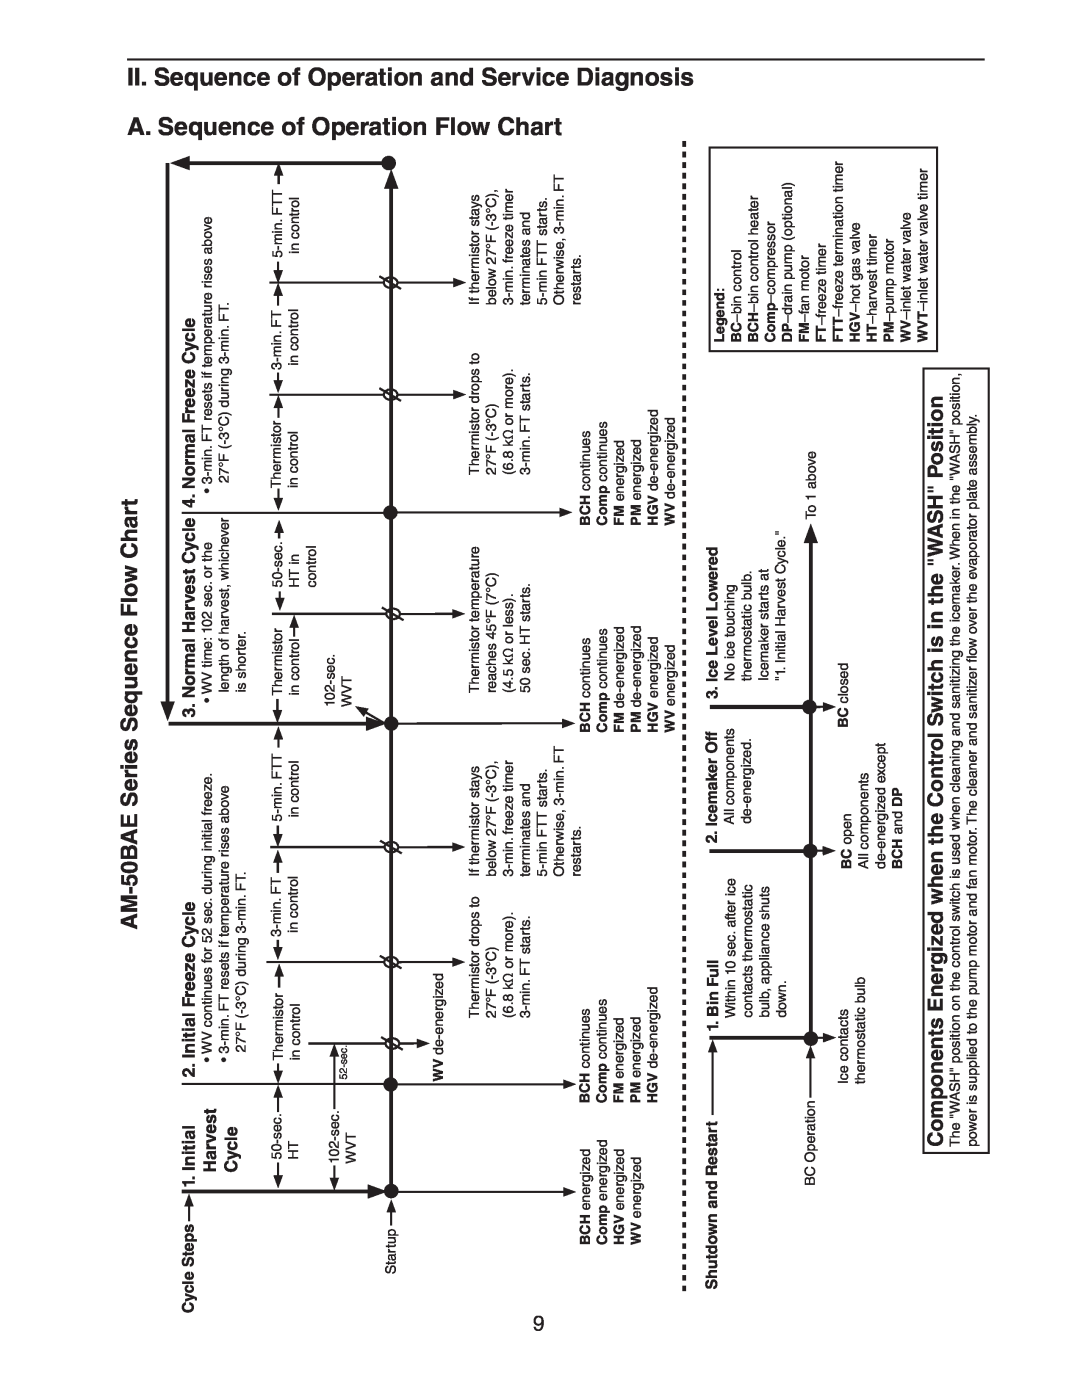 Hoshizaki AM-50BAE Diagnosis, A. Sequence of Operation Flow Chart, II. Sequence of Operation and Service, Initial, Harvest 